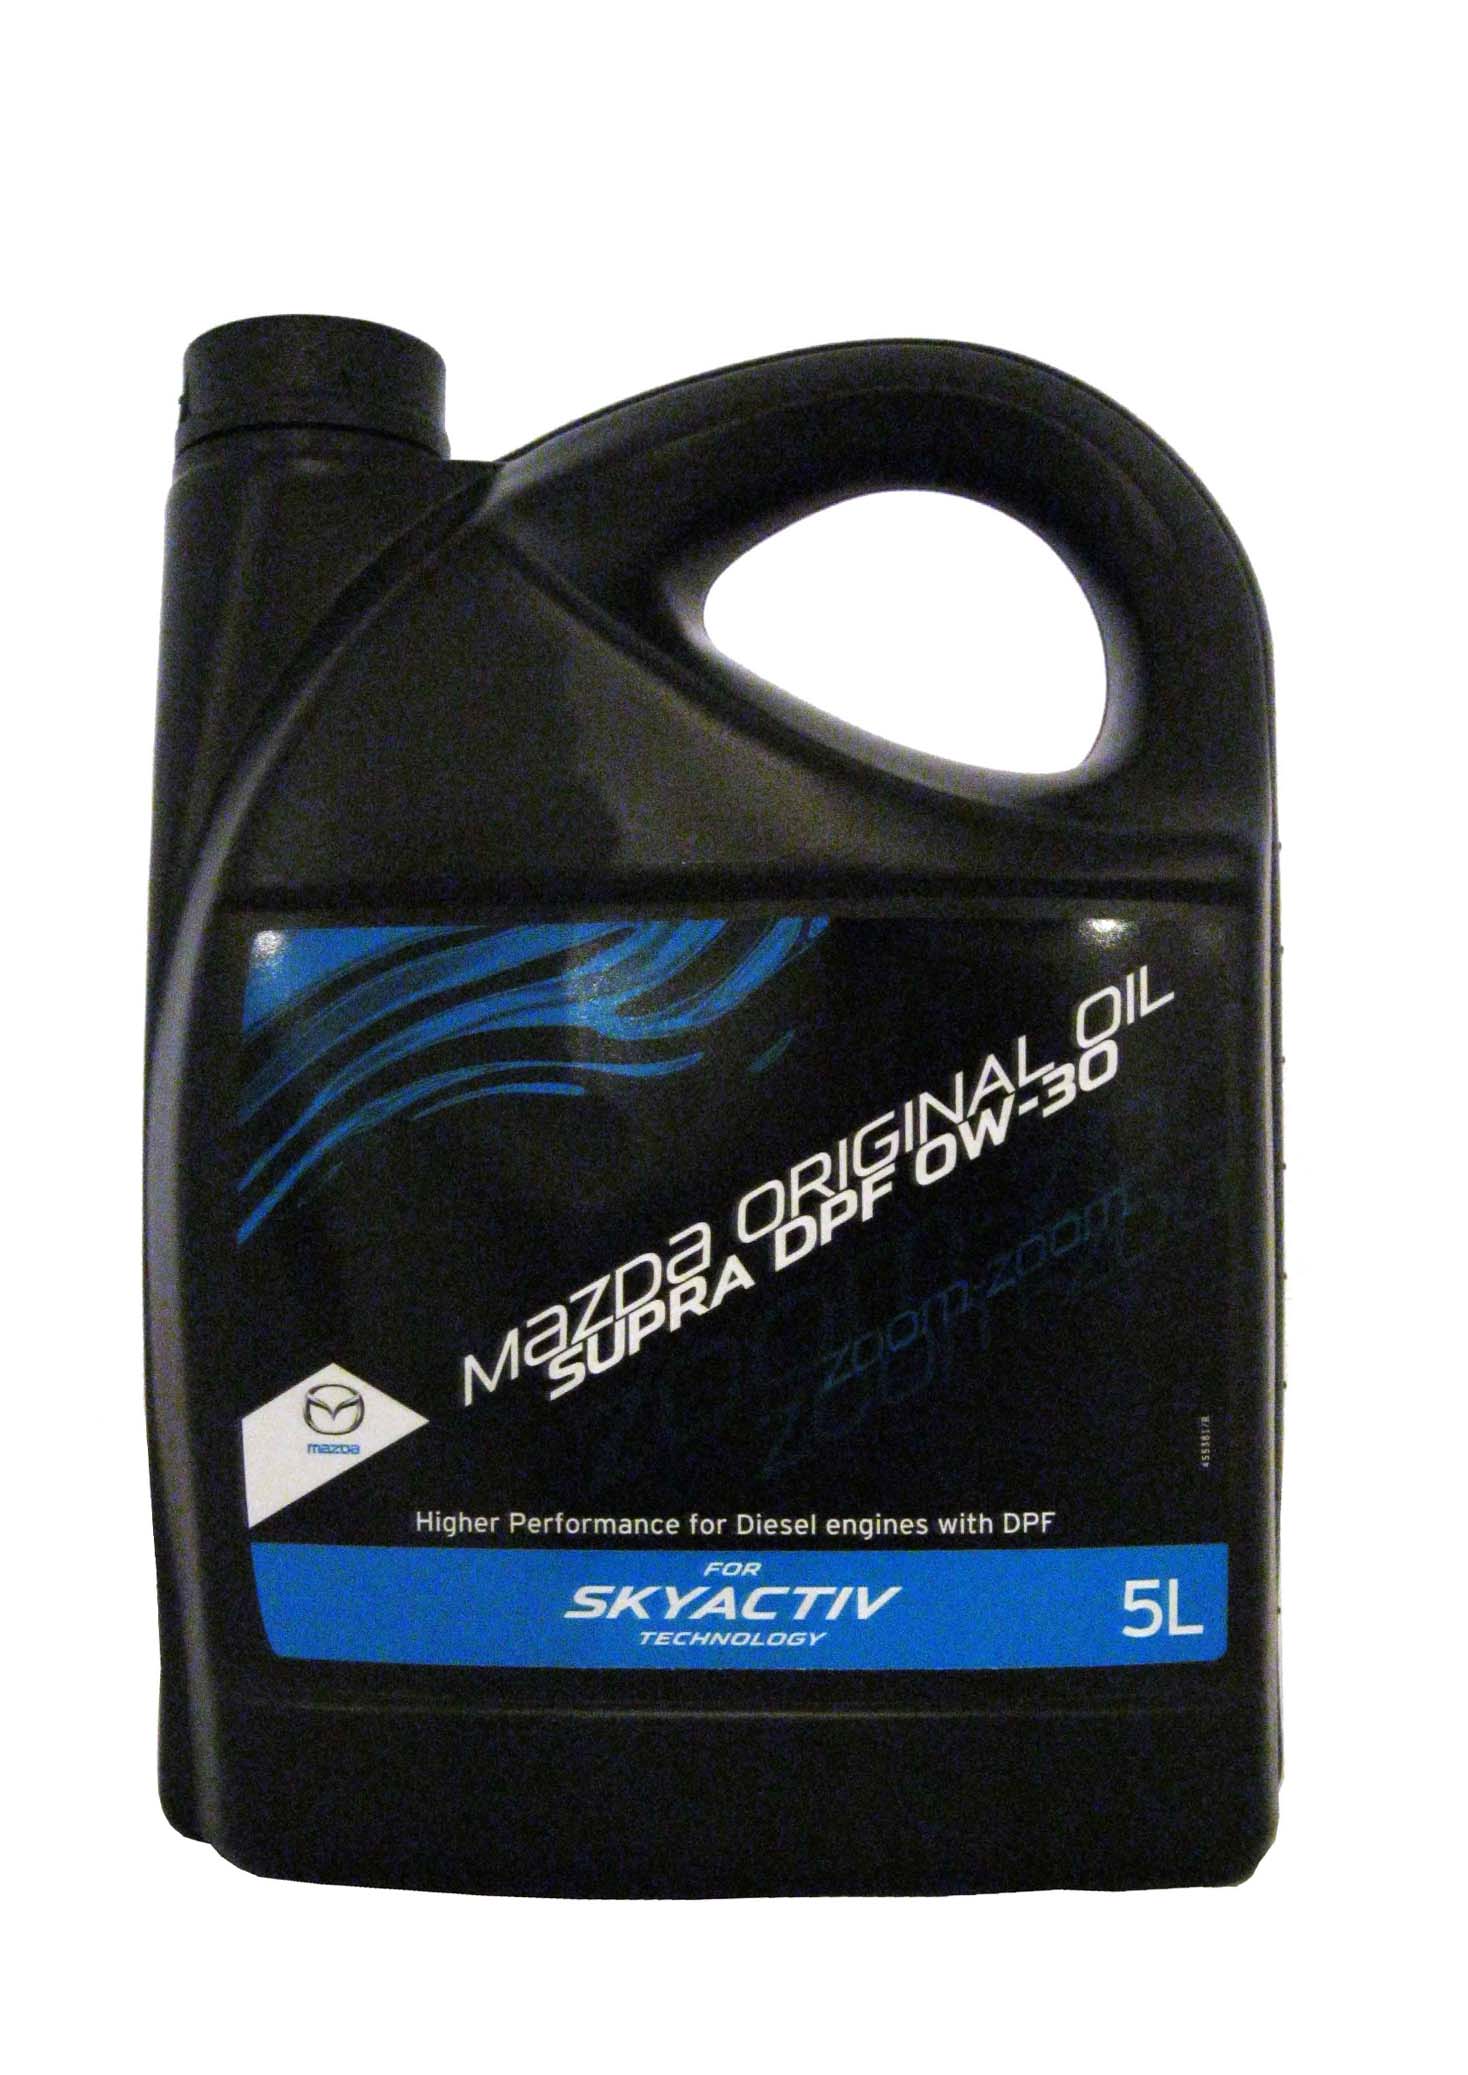 Mazda 0w20. 0w20 Supra Original Oil. Mazda Oil 0w20. 8300771530 Mazda Original Oil. Mazda 0w20 5л.